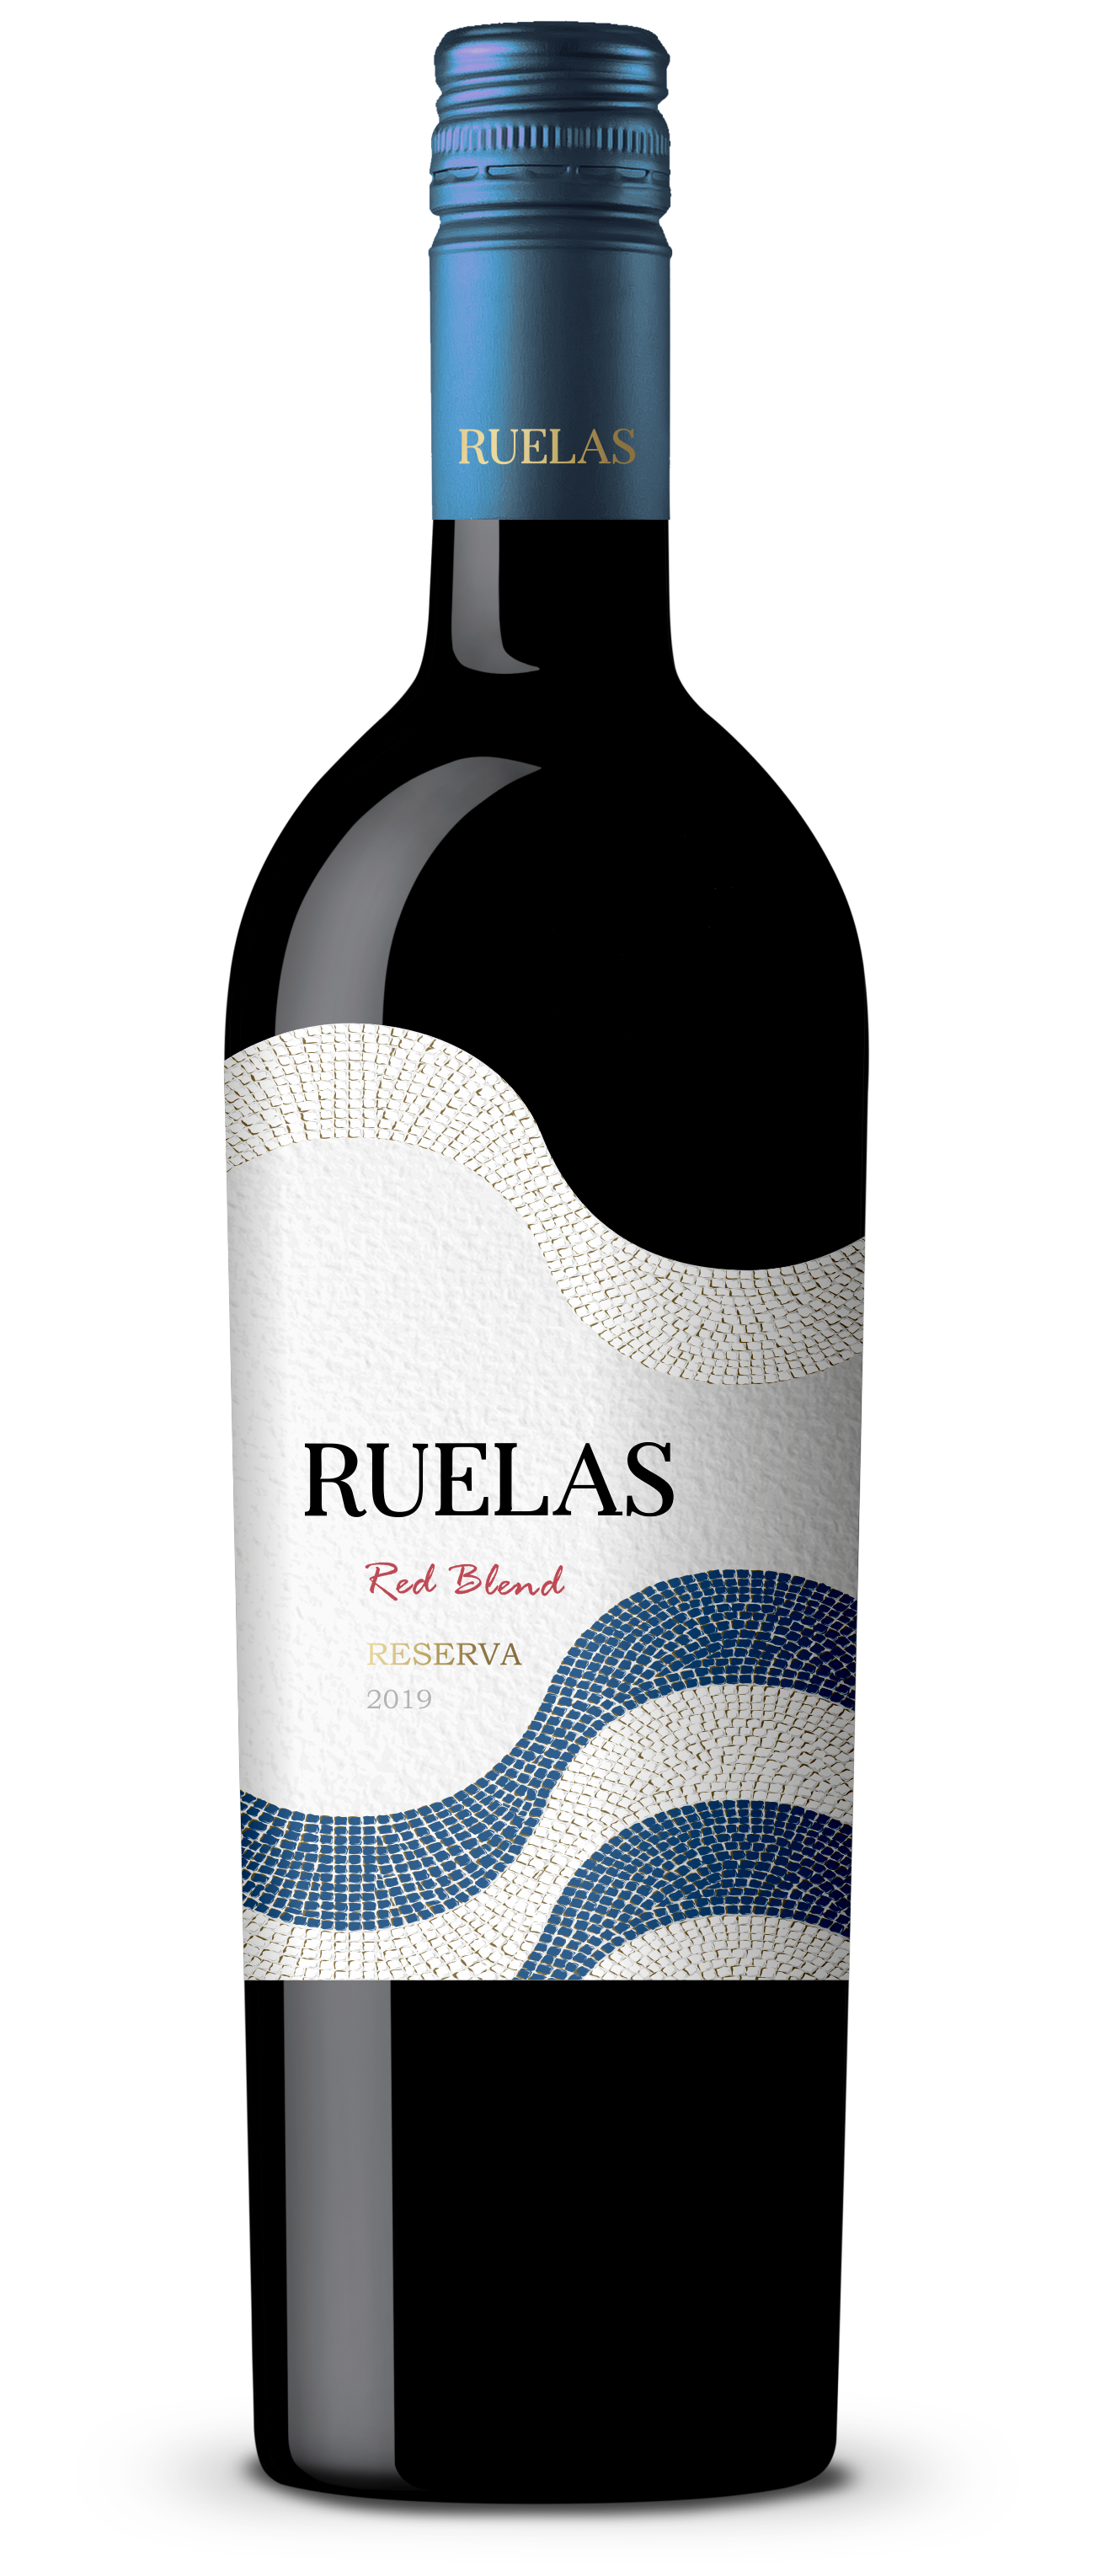 Ruelas Reserva - red blend Vinho Regional Lisboa